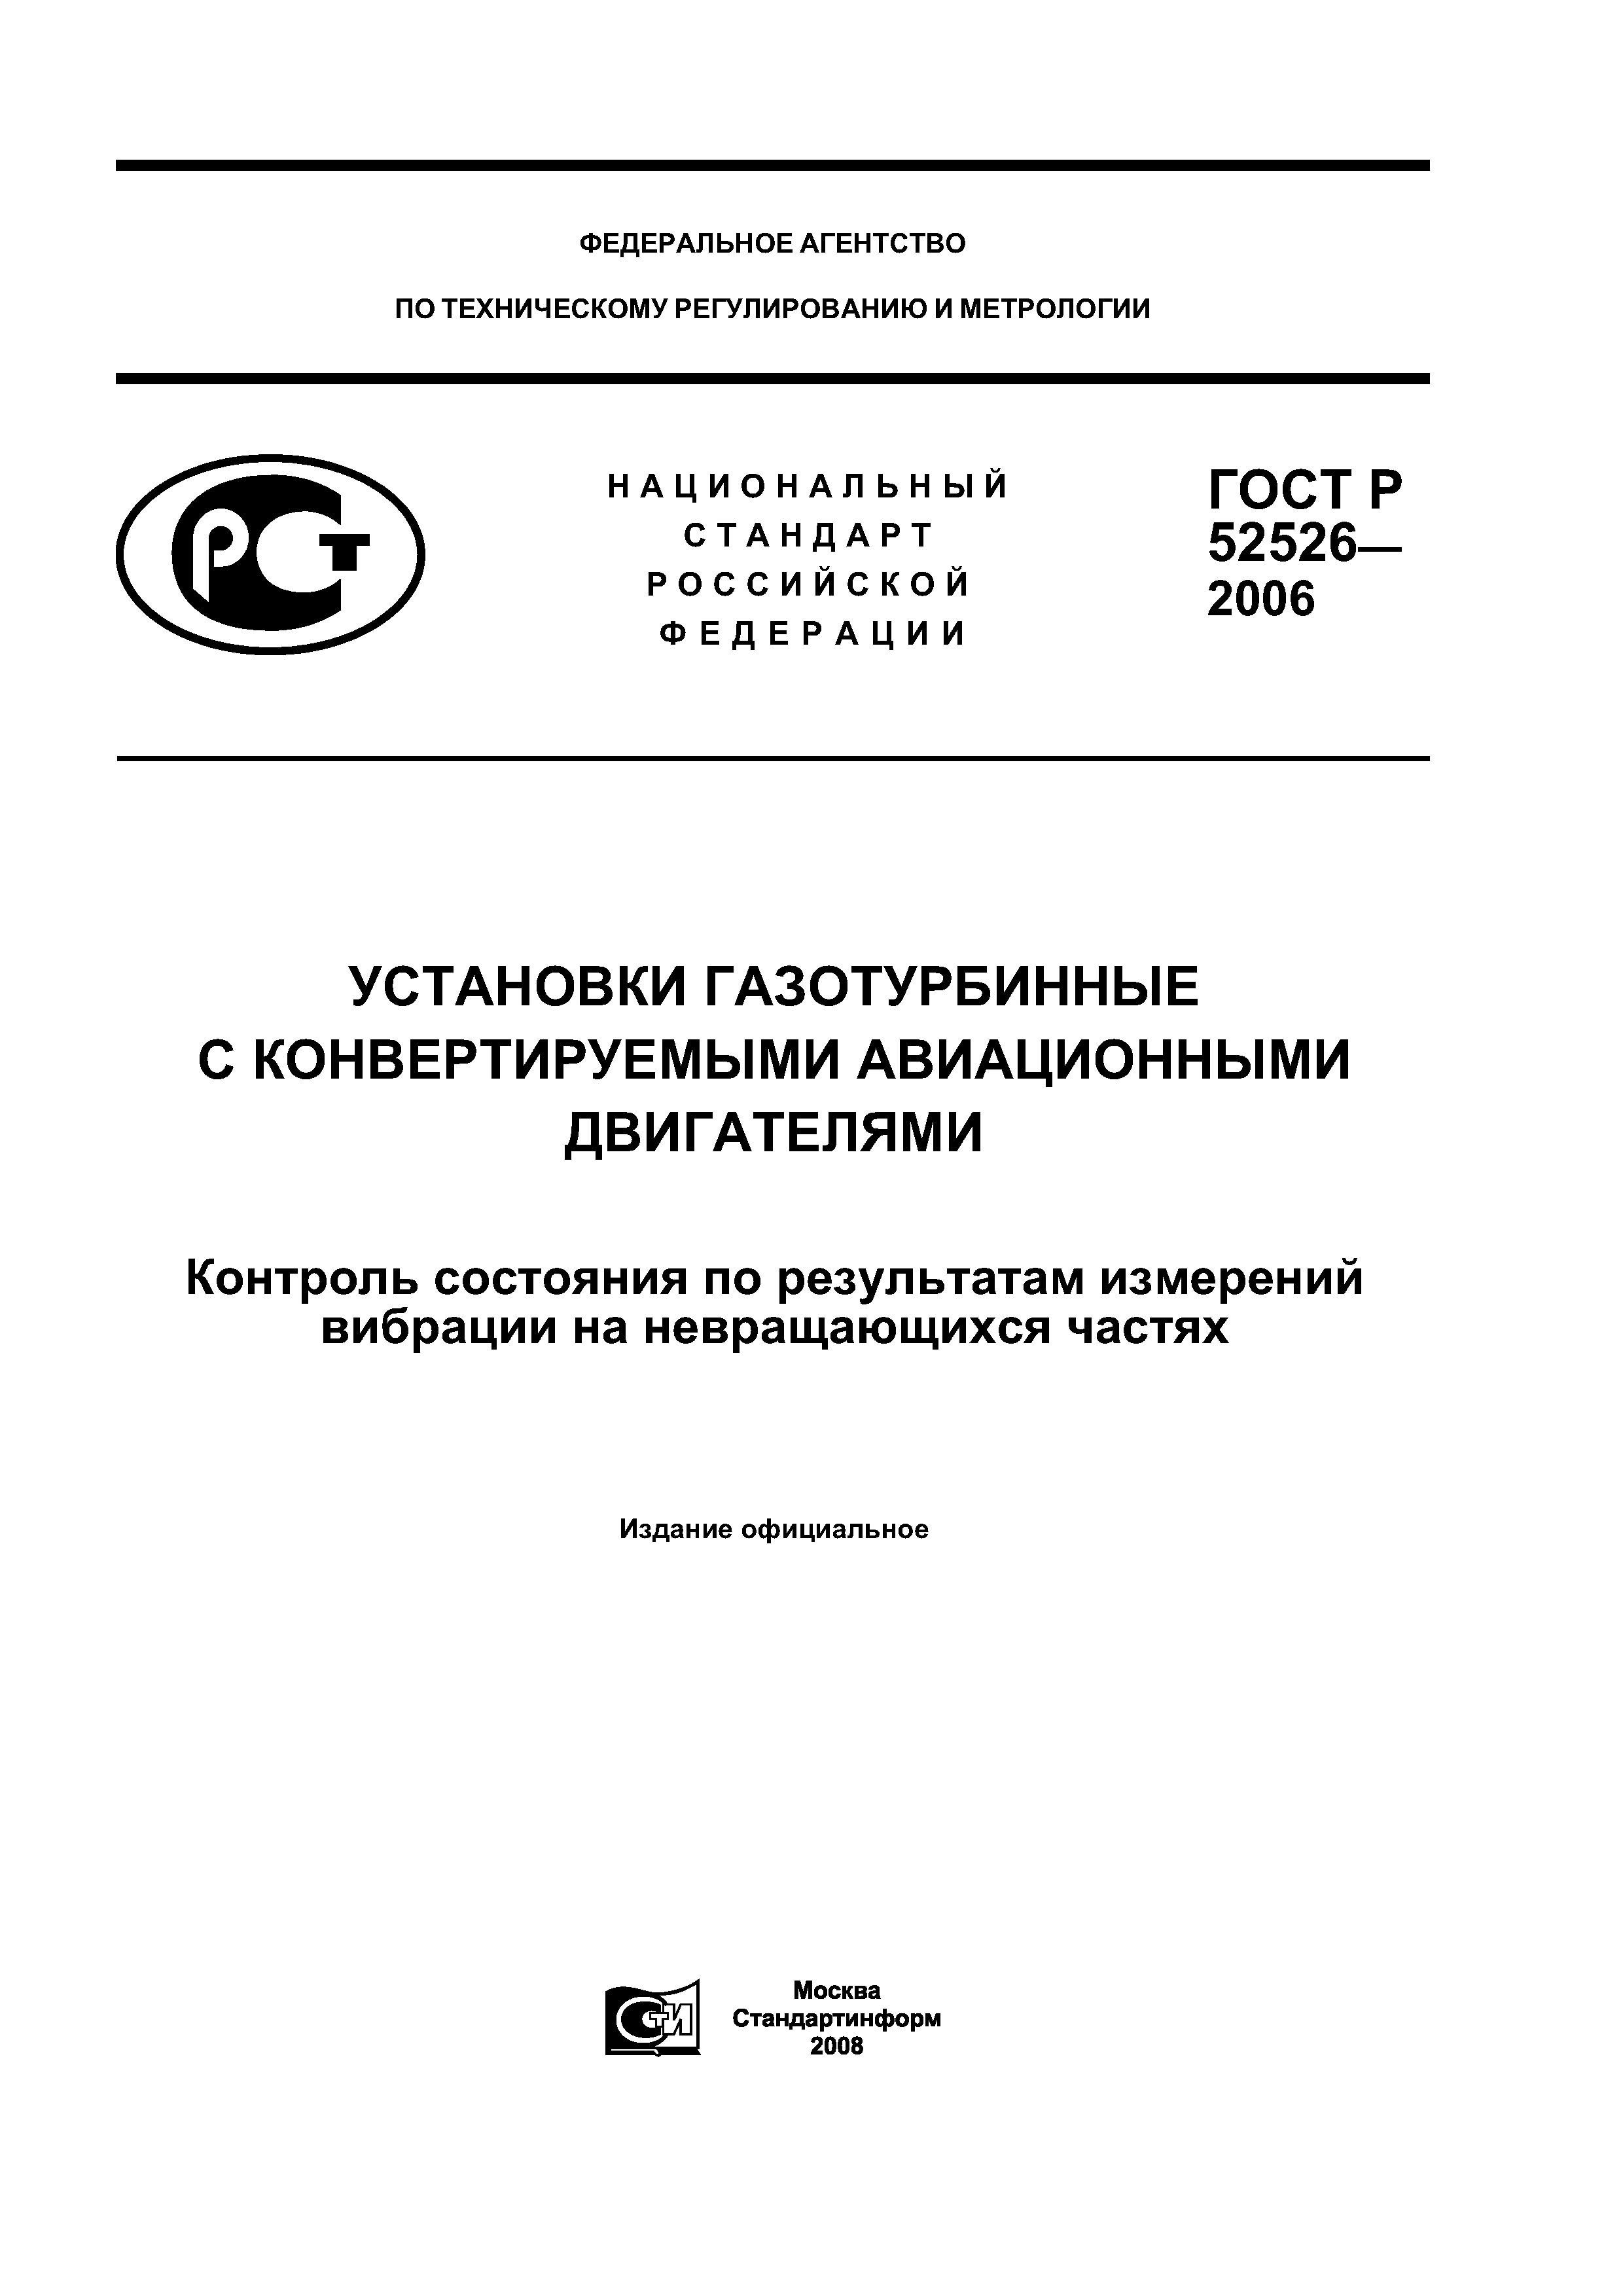 ГОСТ Р 52526-2006